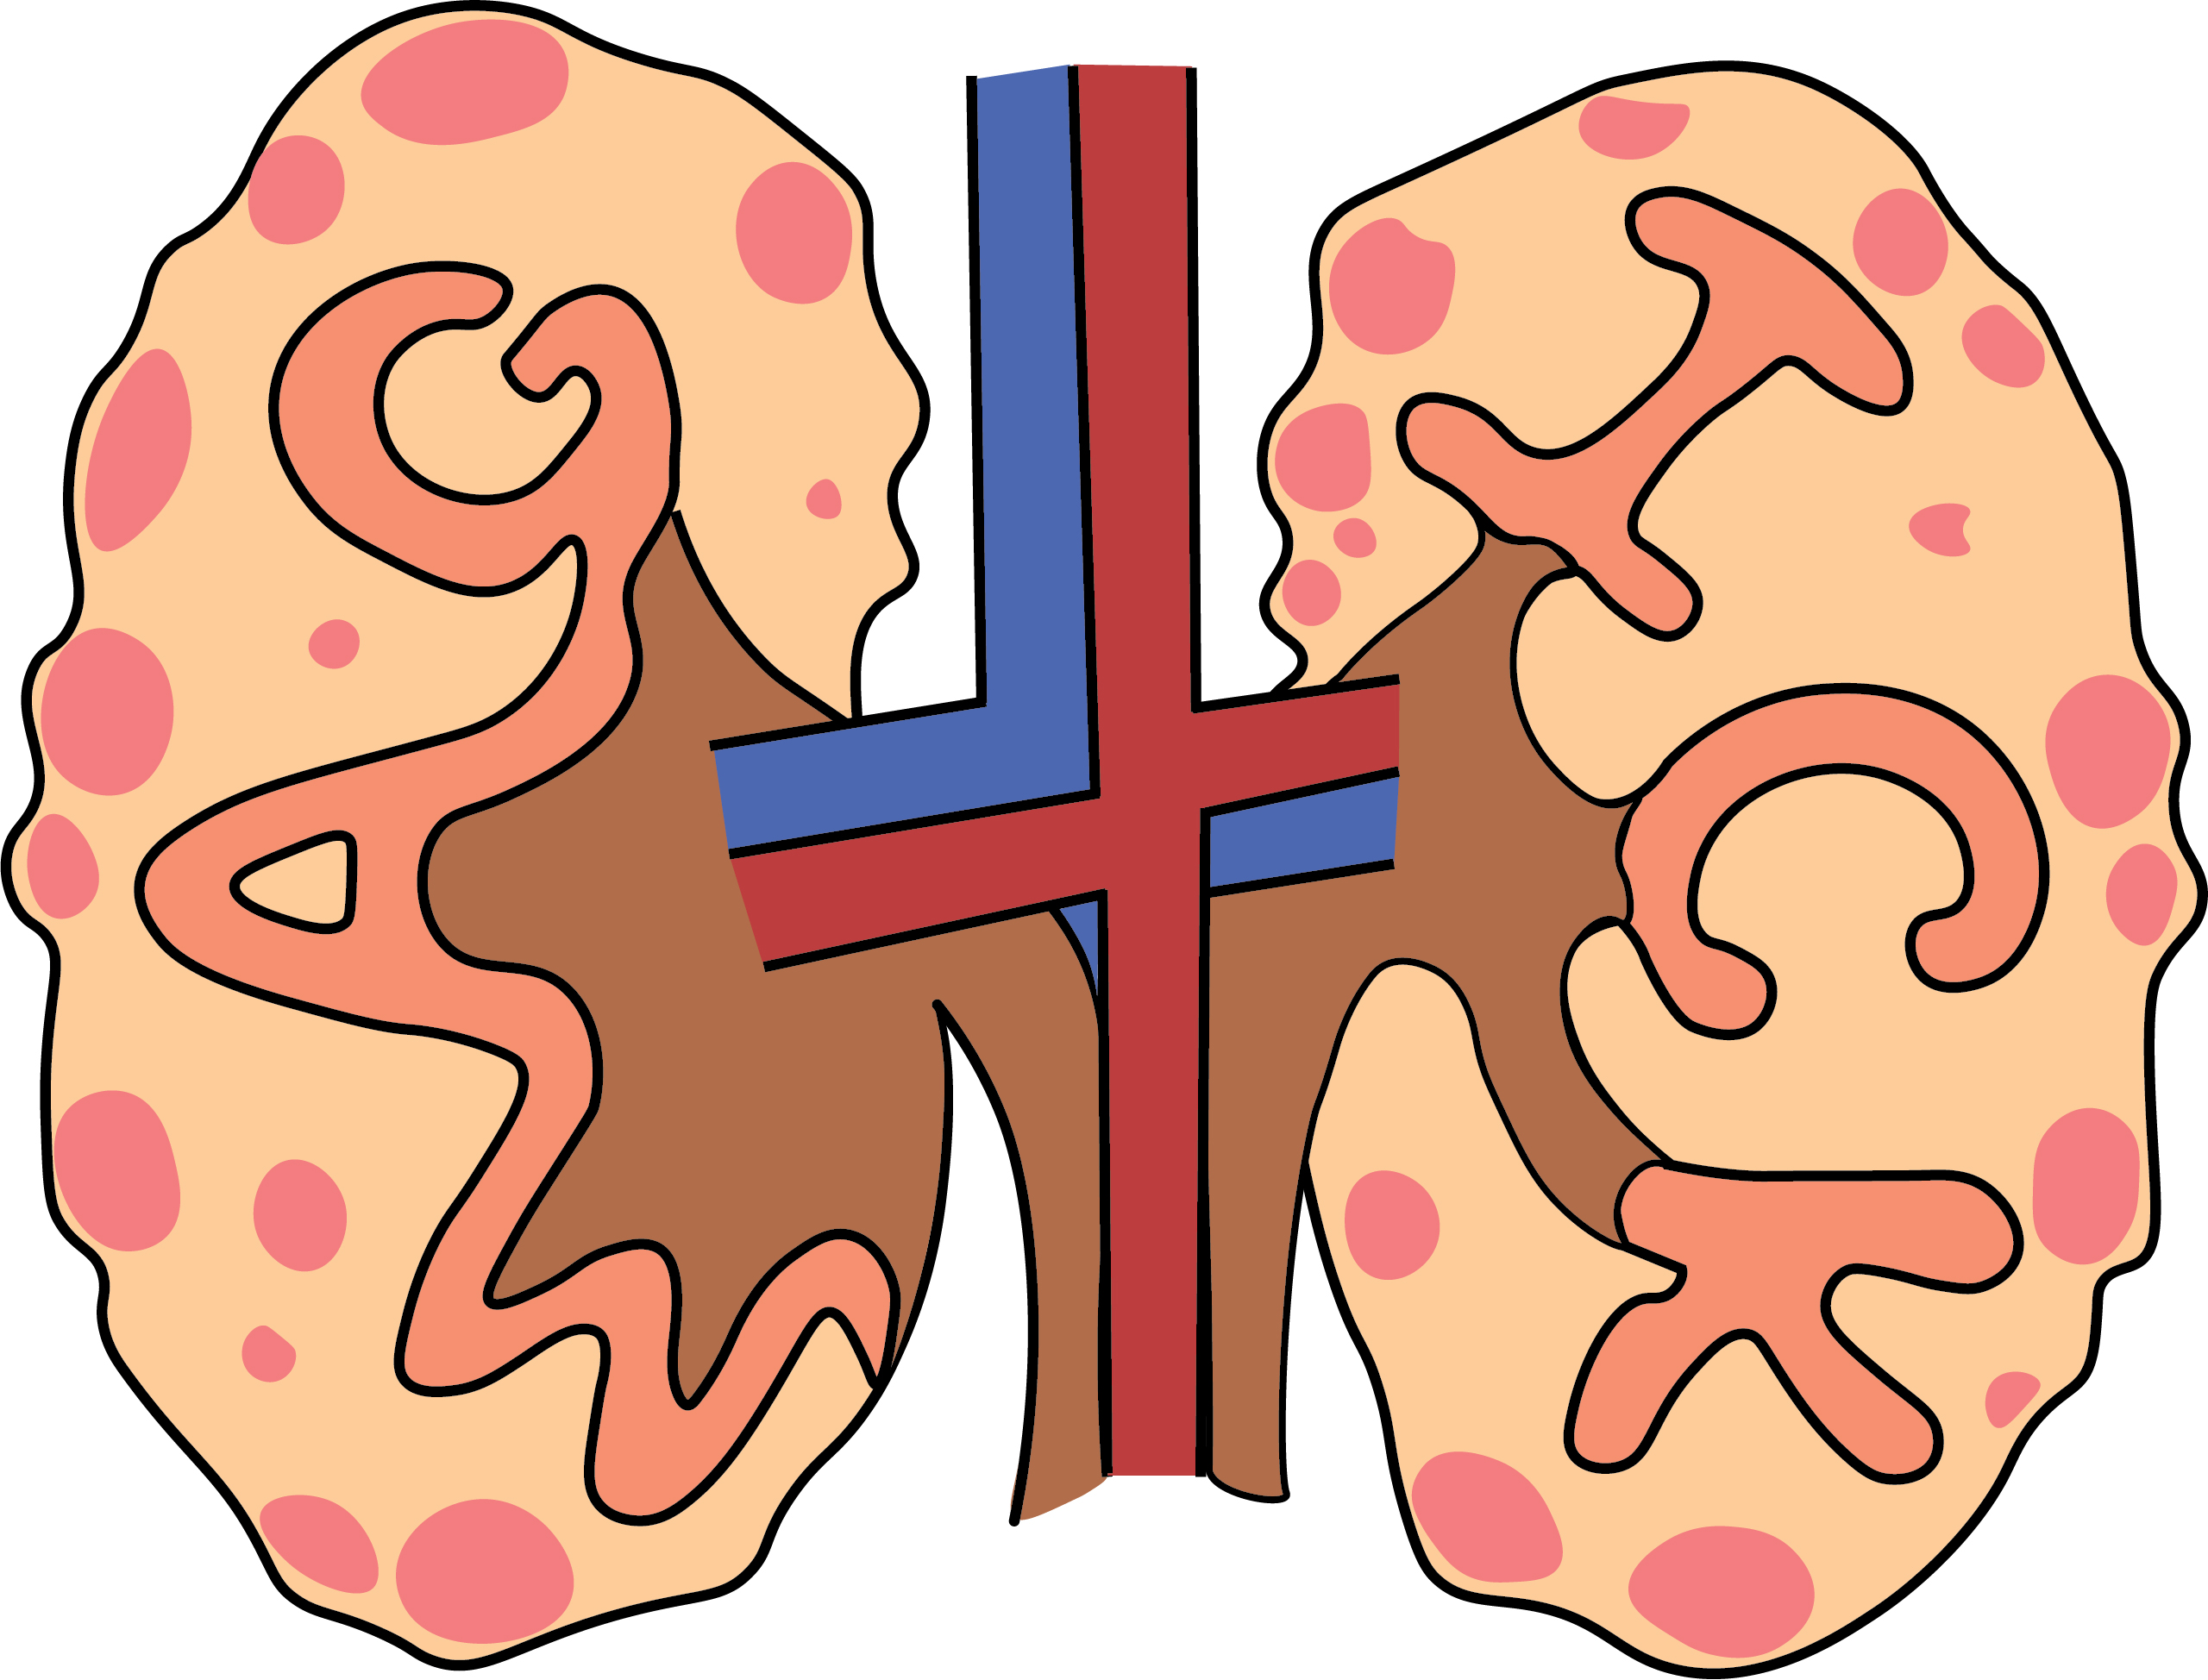 Kidneys Abstract Anatomy Print Medical Art Nephrology Poster – MimiPrints  Anatomy Prints And Science Art